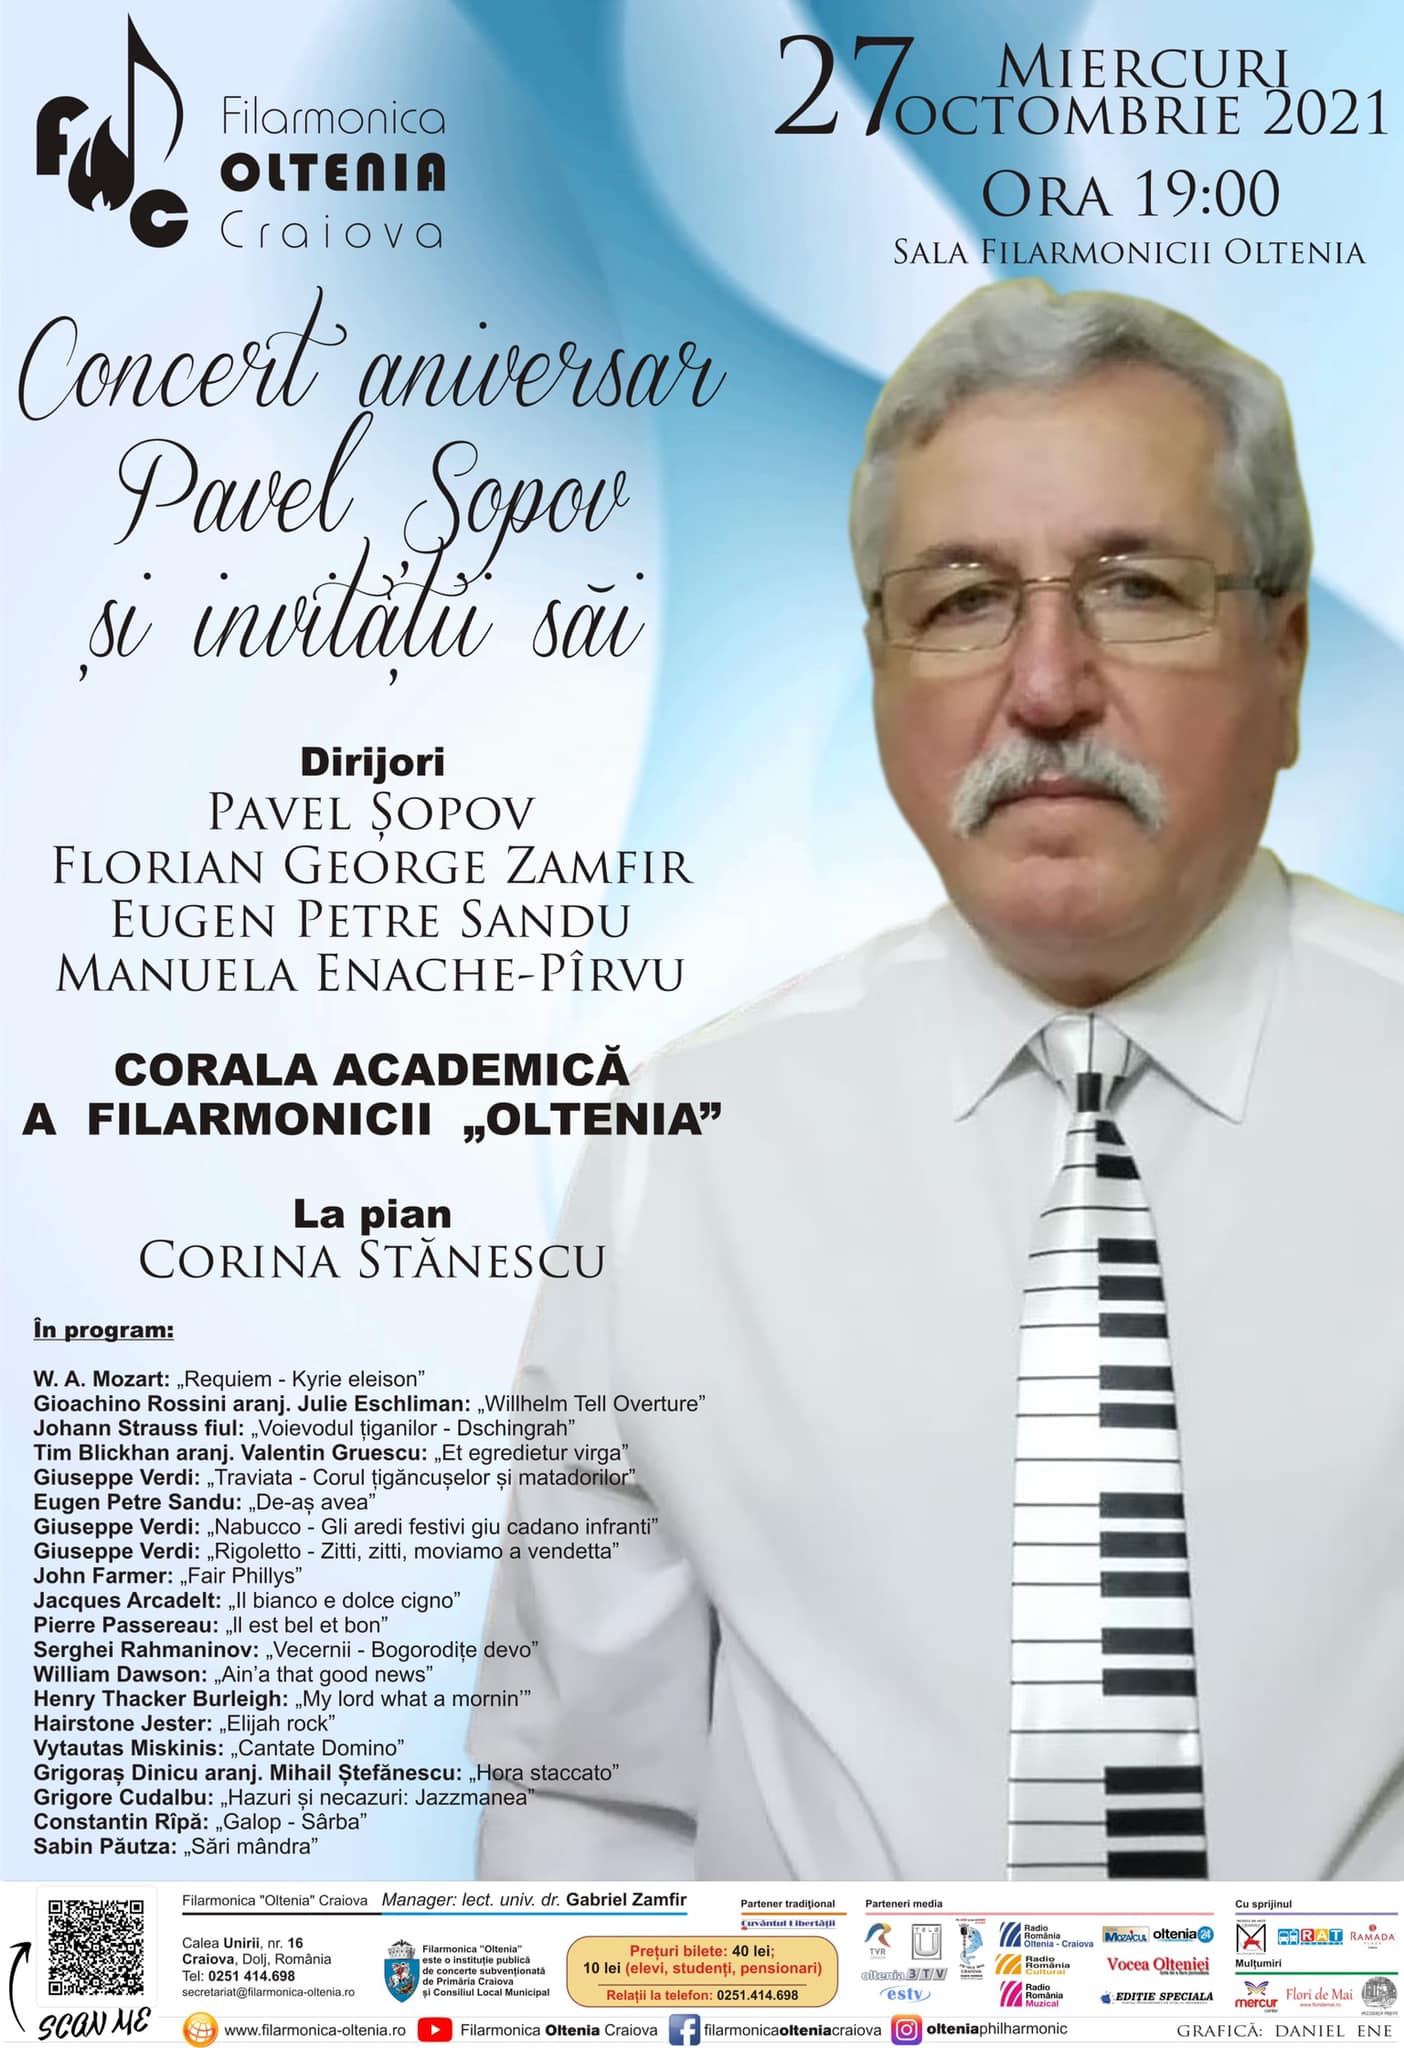 Concert aniversar Pavel Șopov și invitații săi